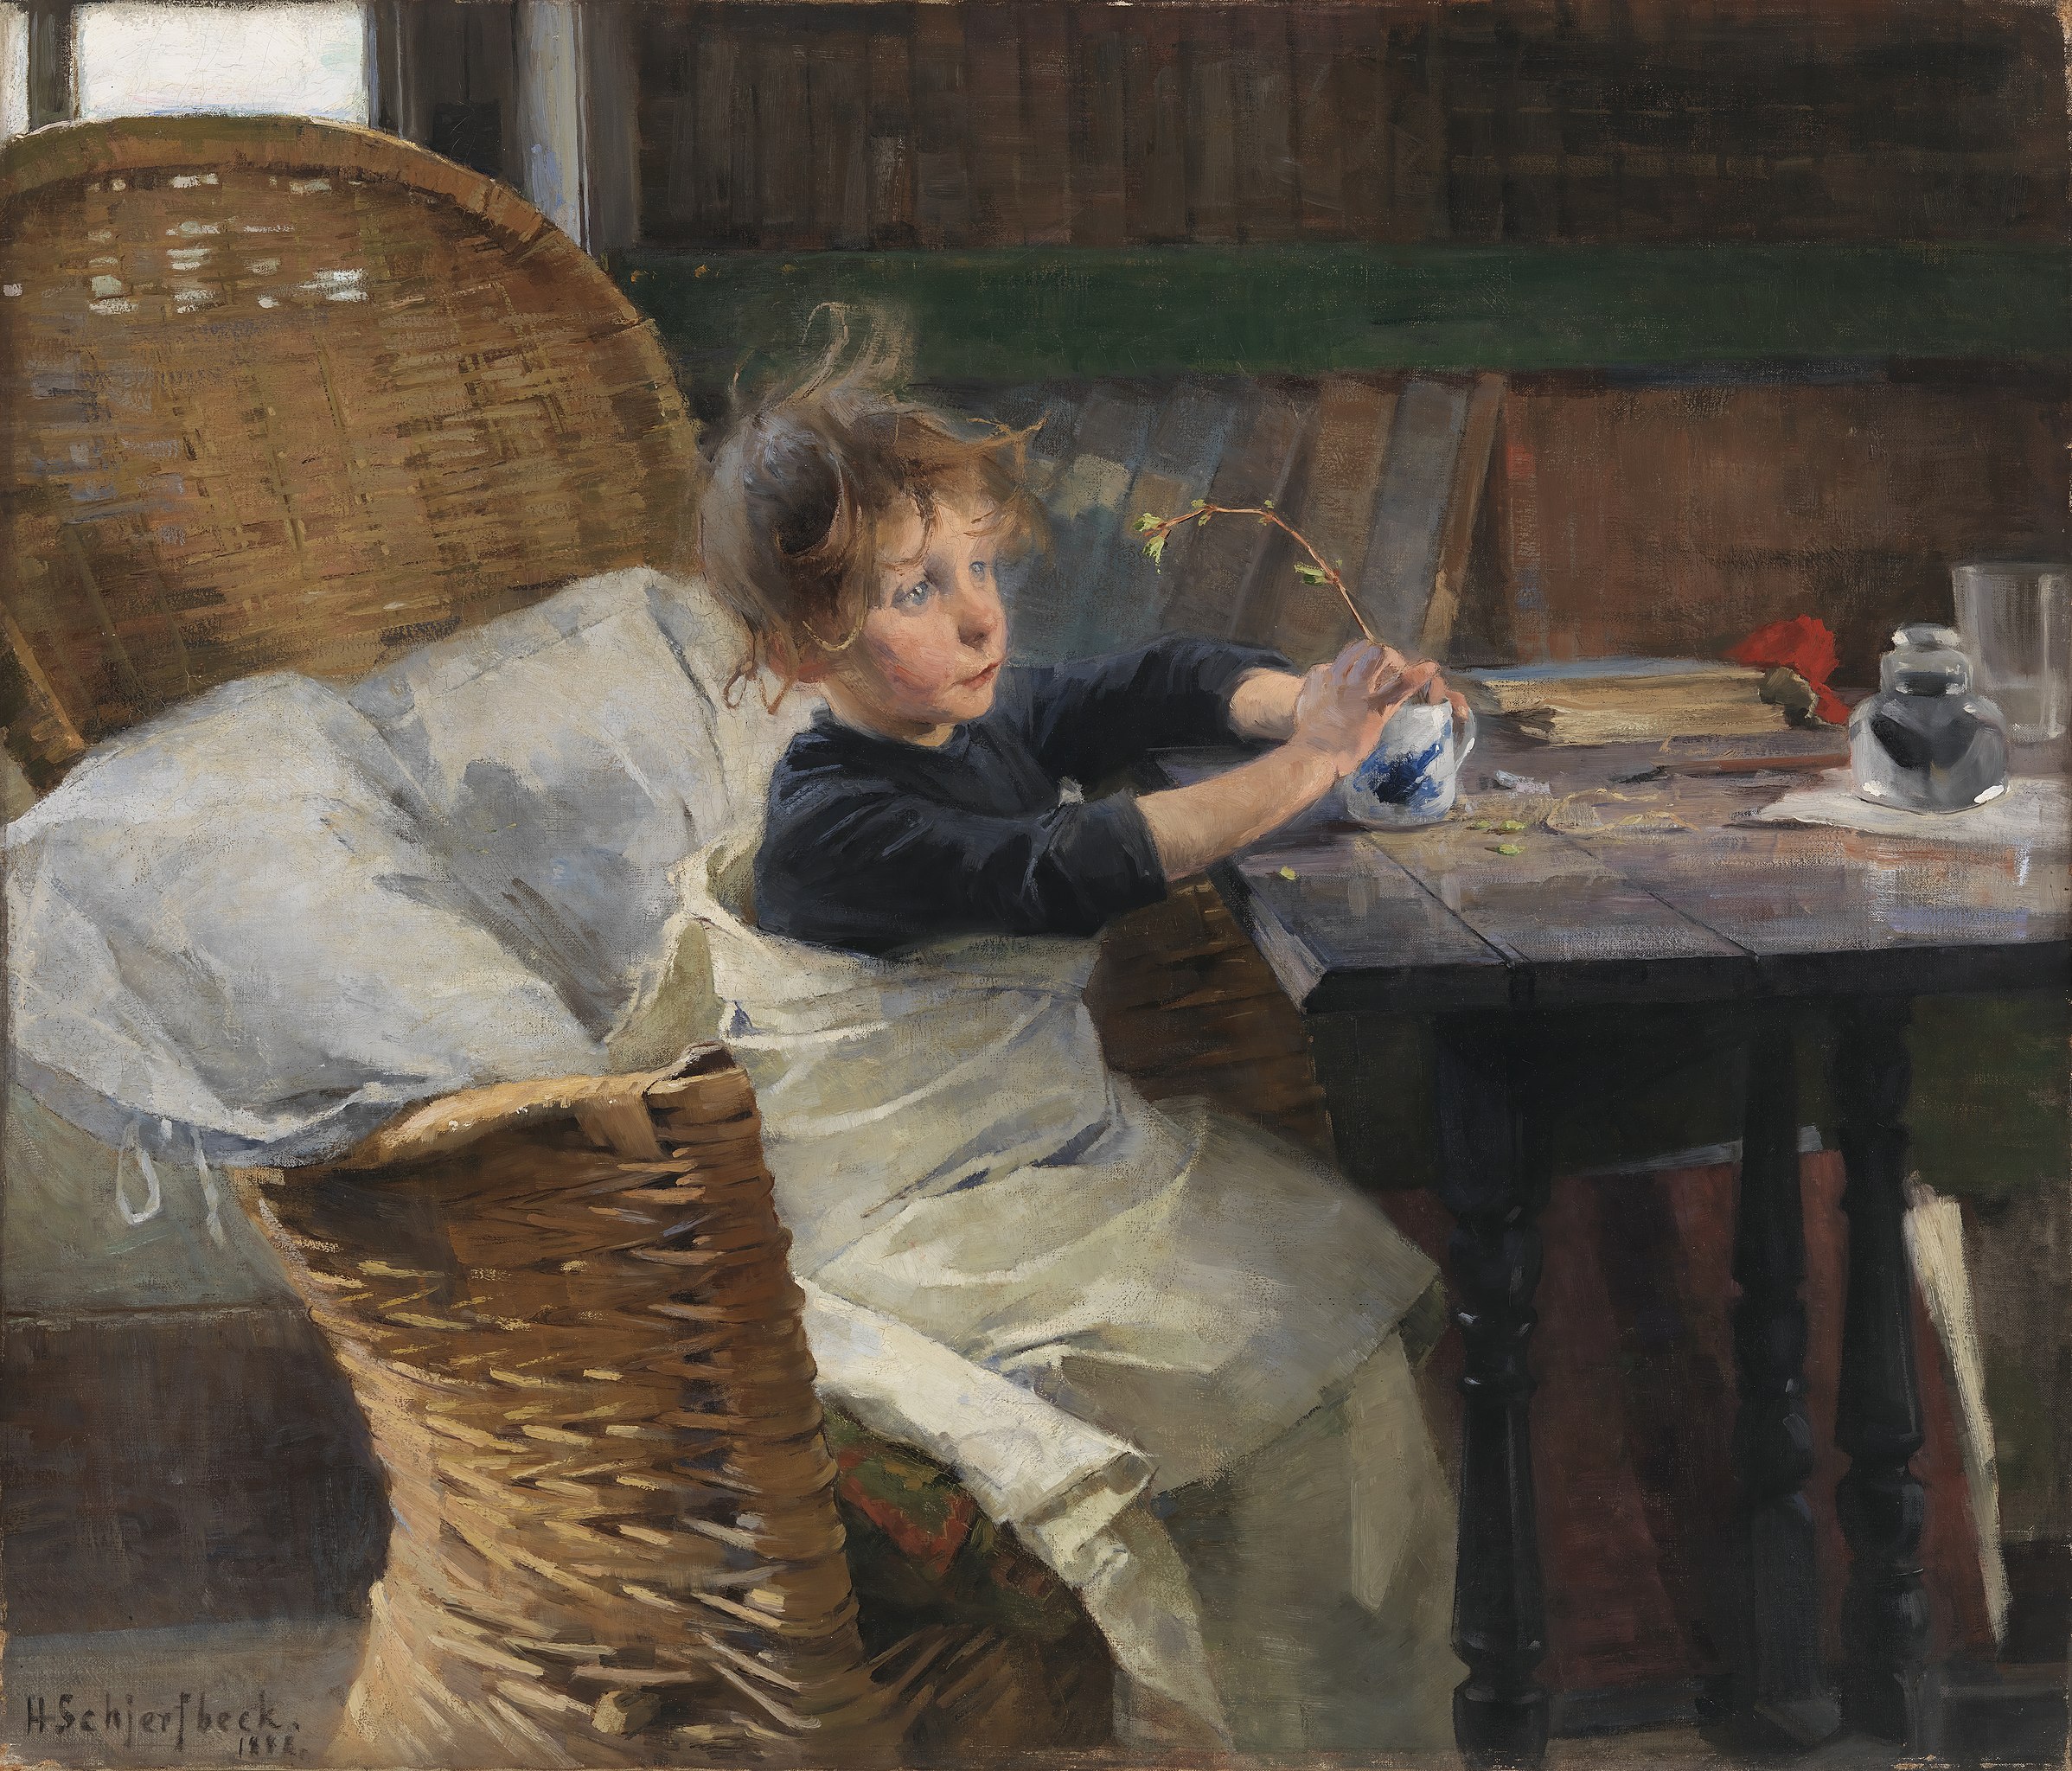 La convalescente by Helene Schjerfbeck - 1888 - 92 x 107 cm Europeana